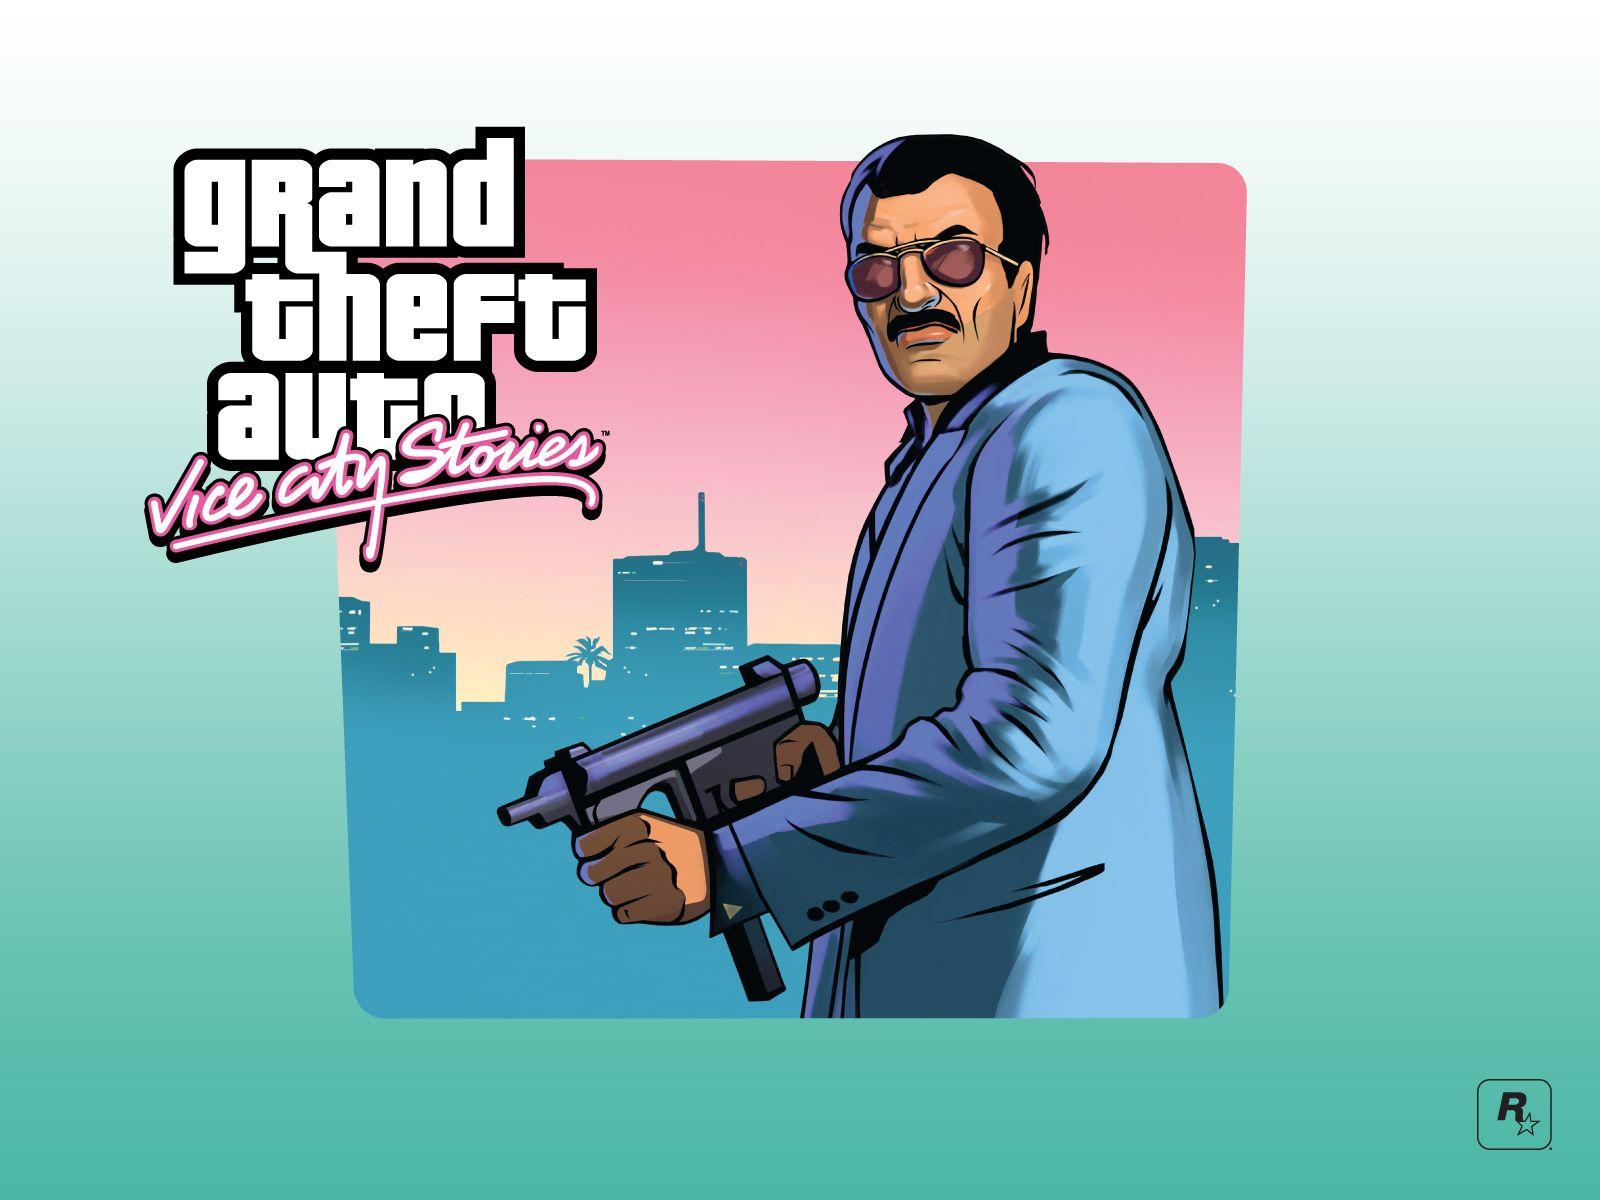 Grand Theft Auto: Vice City Stories. Grand Theft Auto Vice City